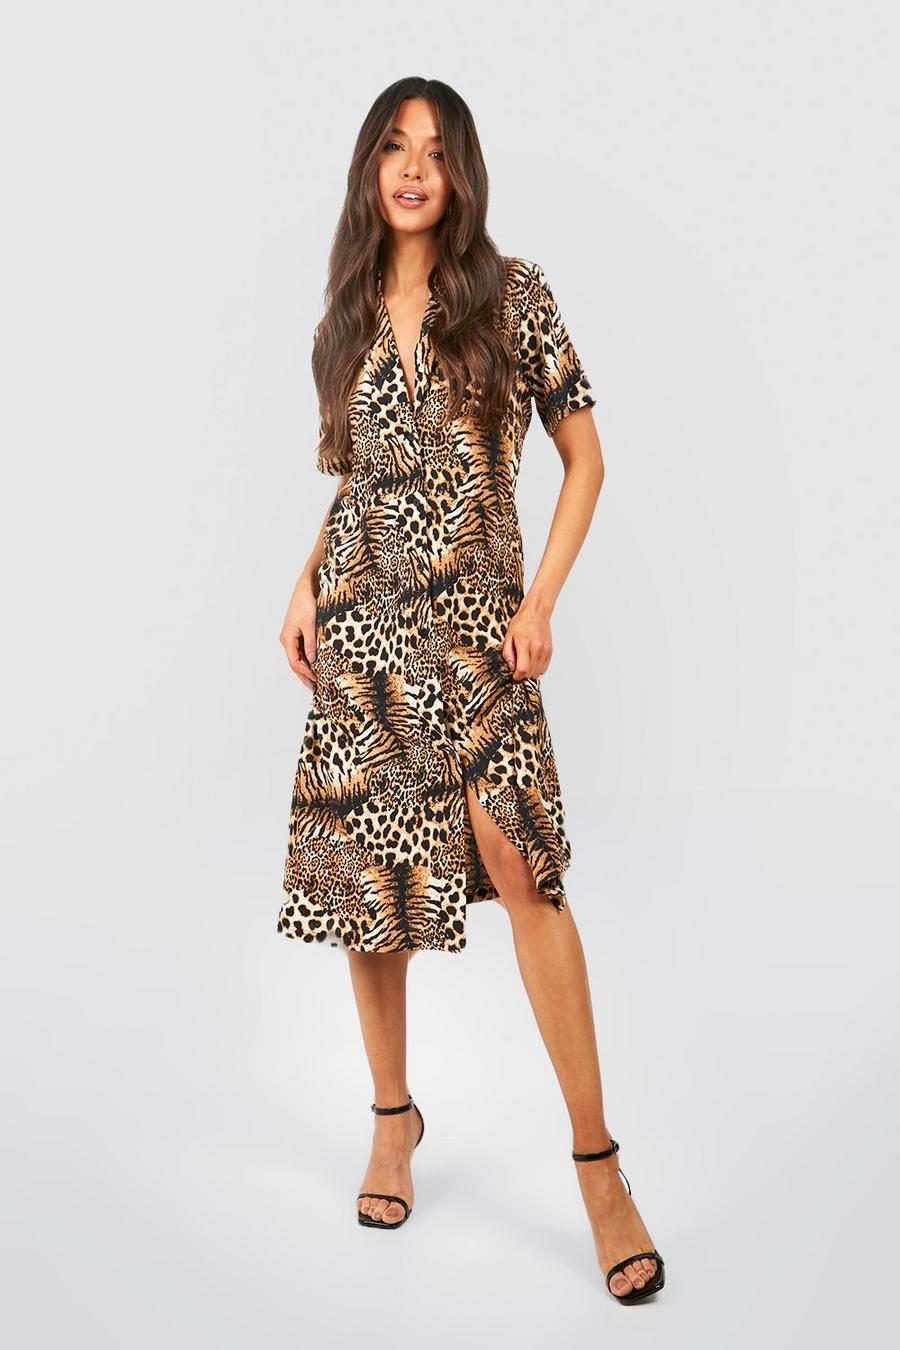 Tiger And Leopard Mix Shirt Style Midi Dress